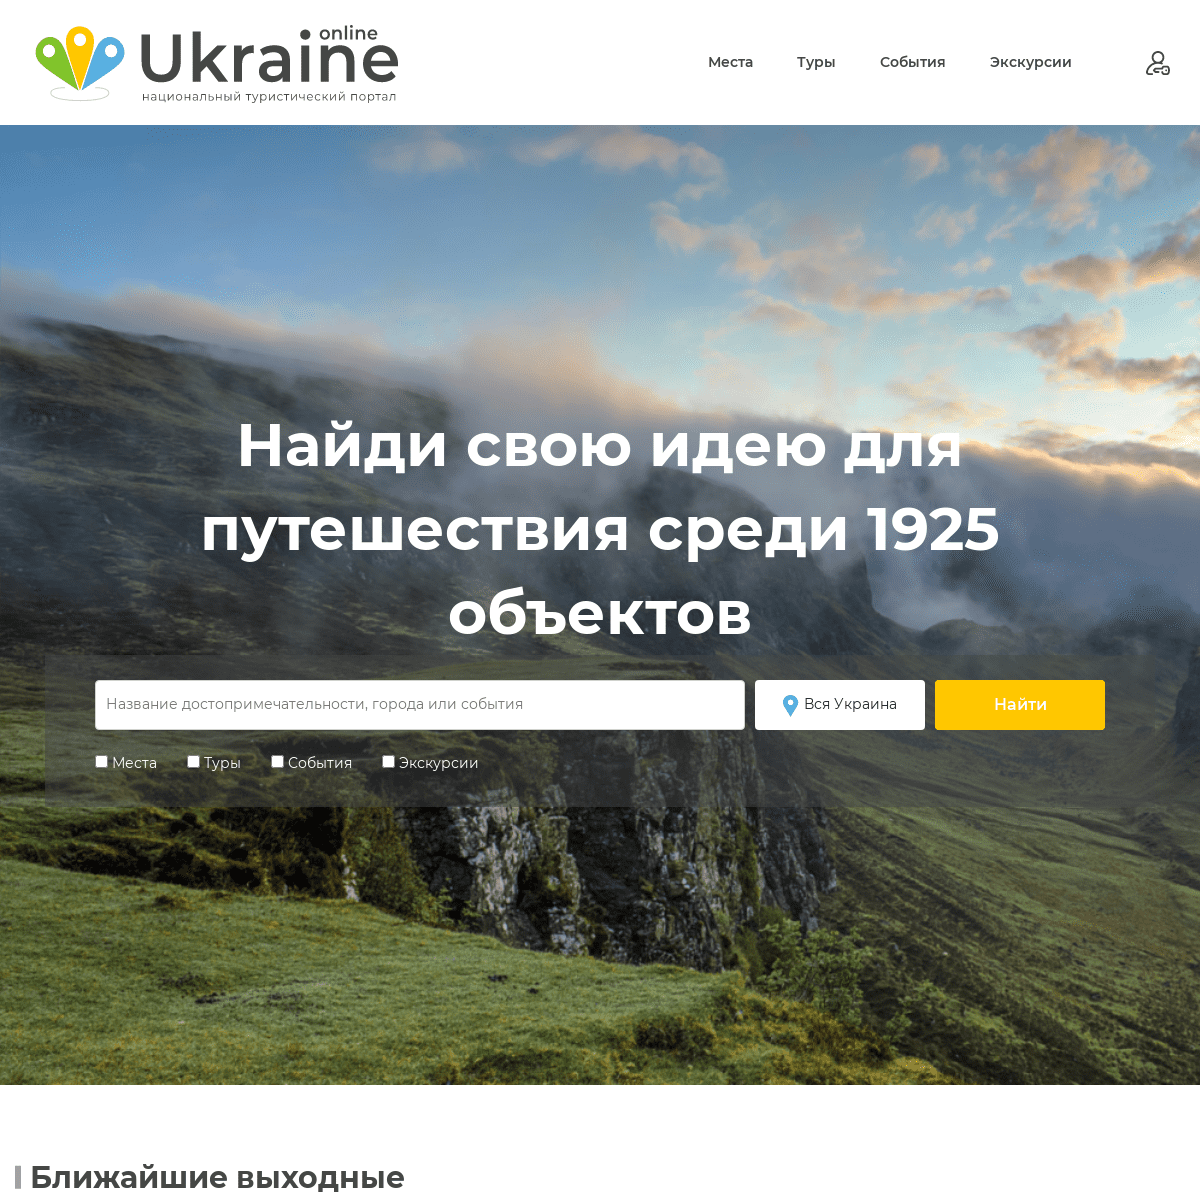 A complete backup of https://ukraineonline.com.ua